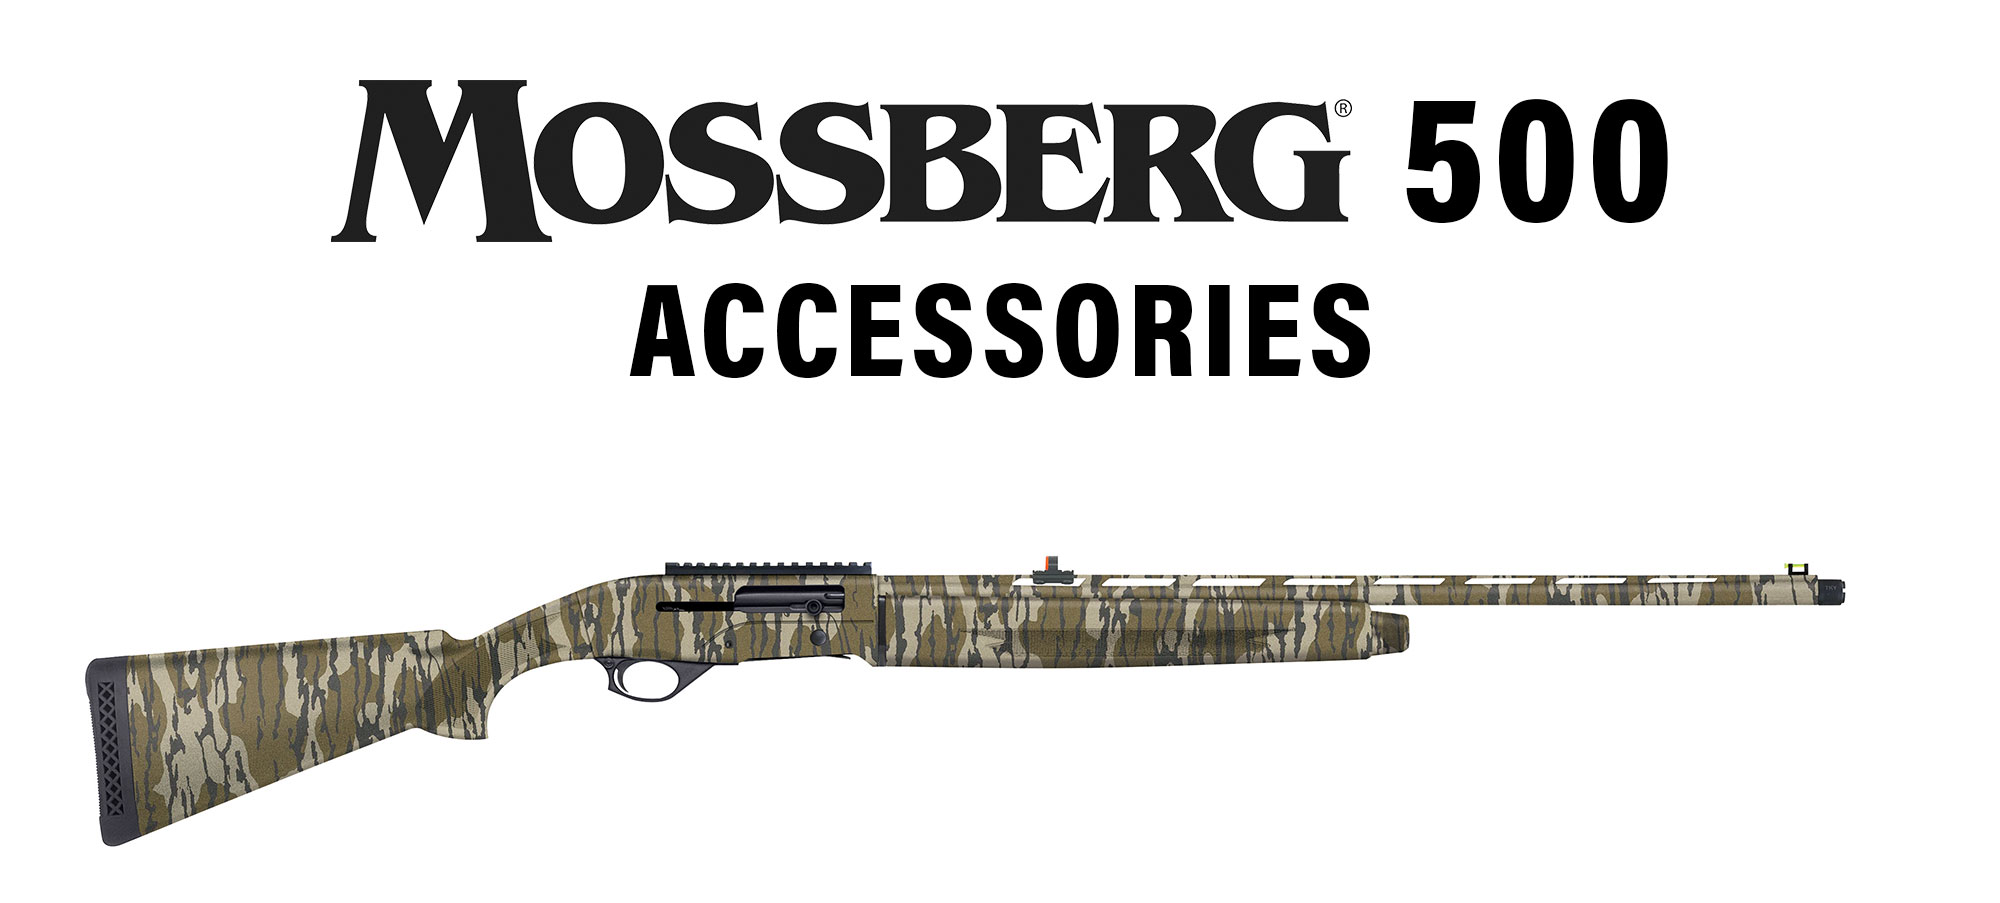 Mossberg 500 Accessories